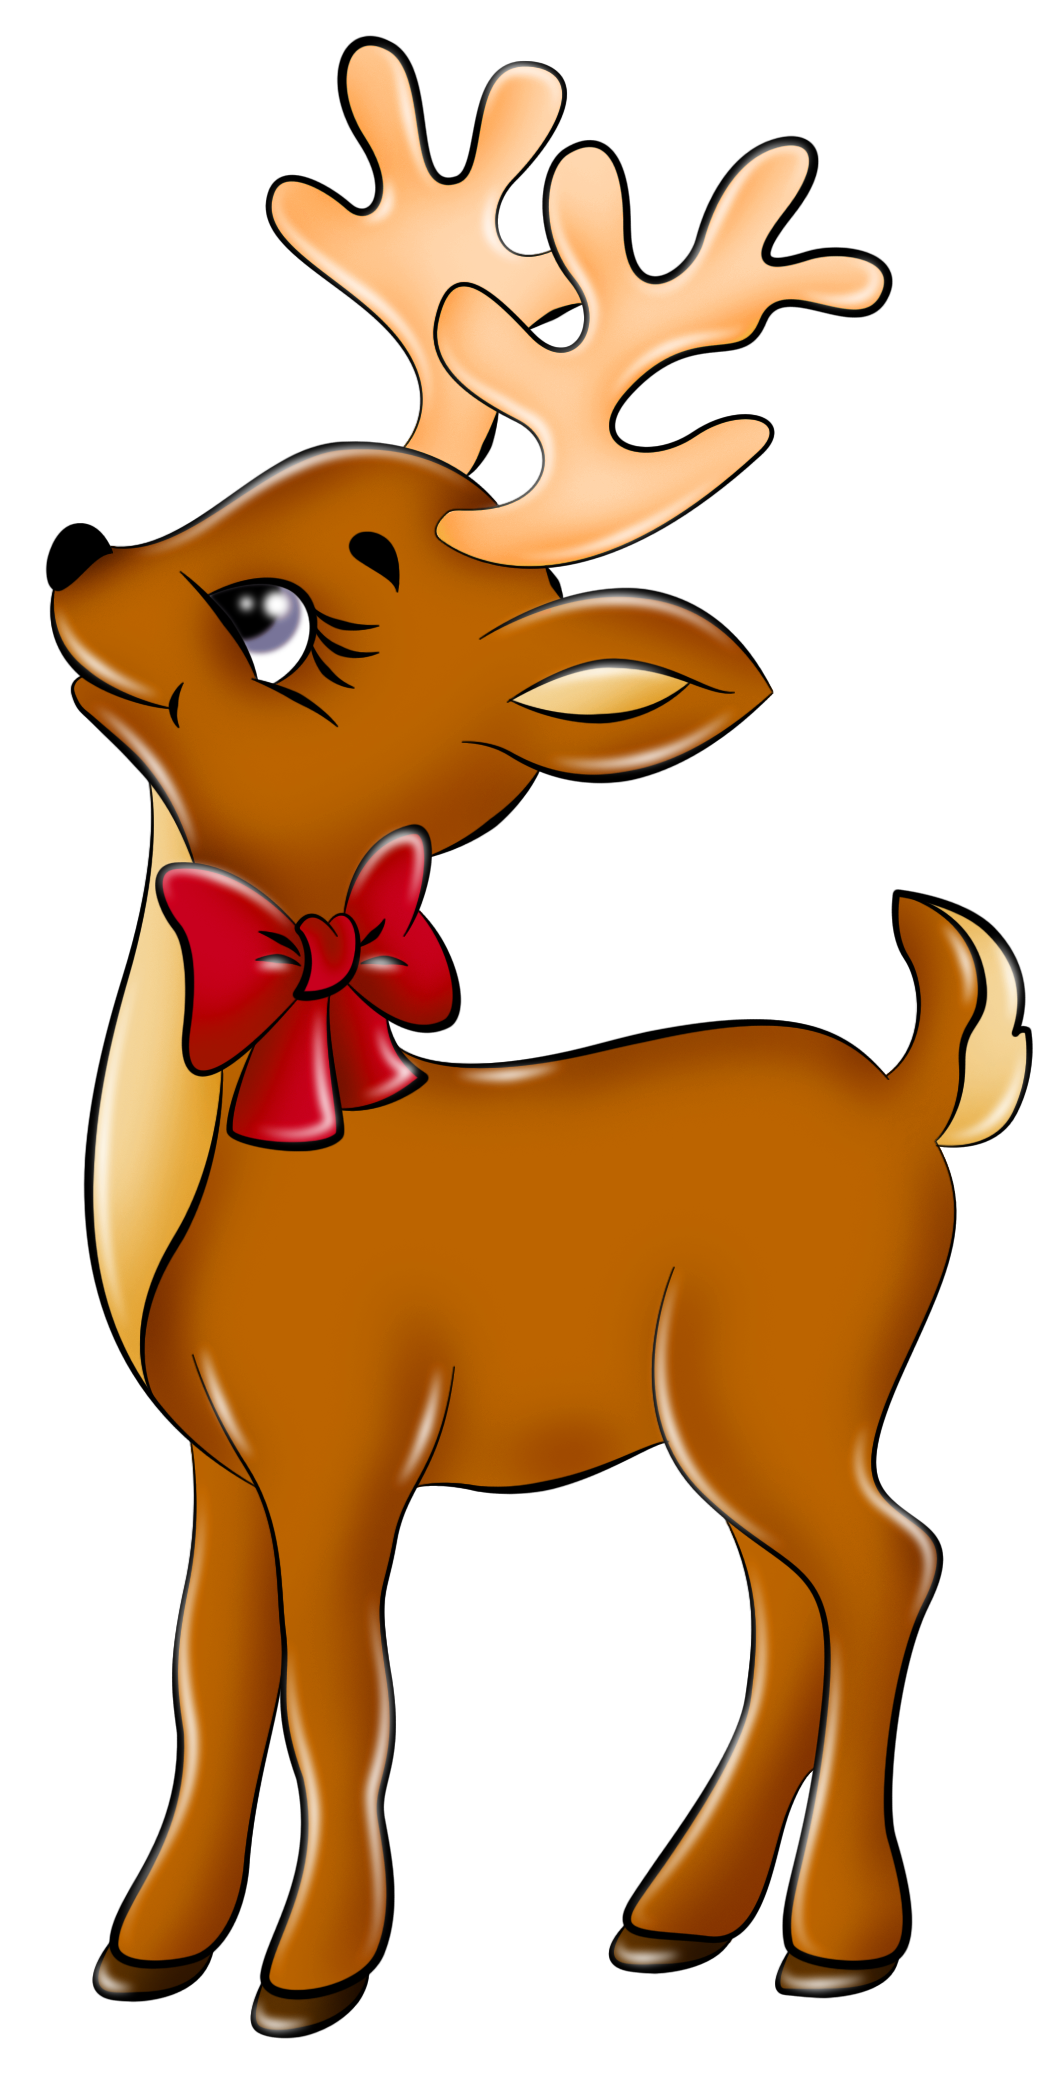 Reindeer clipart free download clip art on